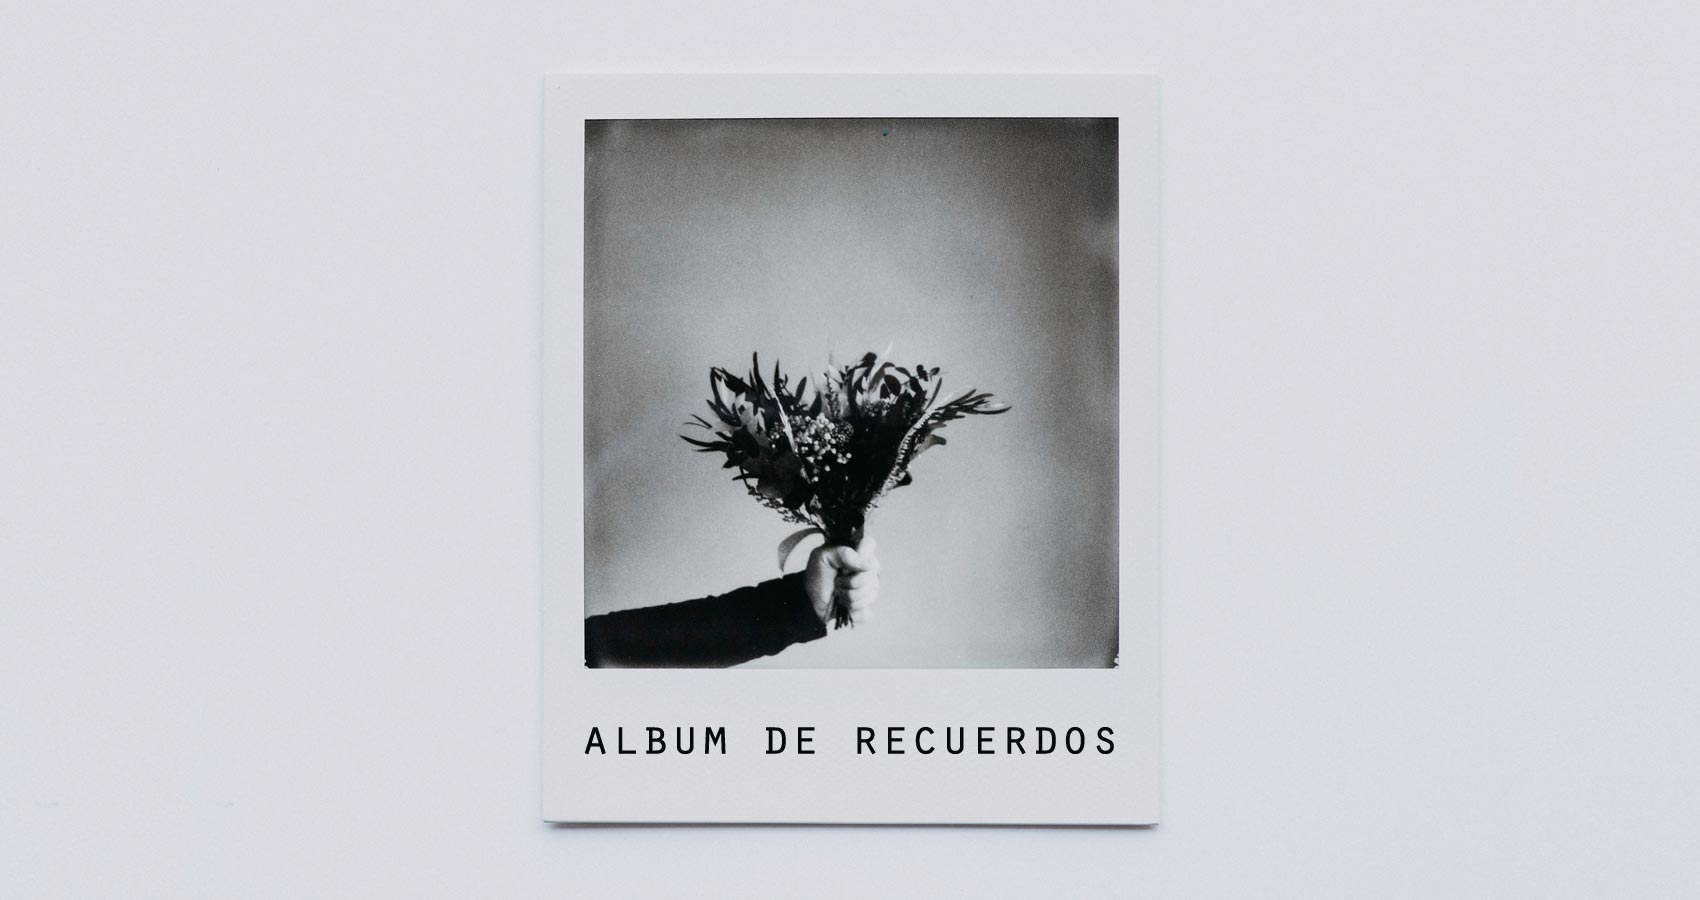 Album de Recuerdo, a poem by Jose Wan Diaz at Spillwords.com